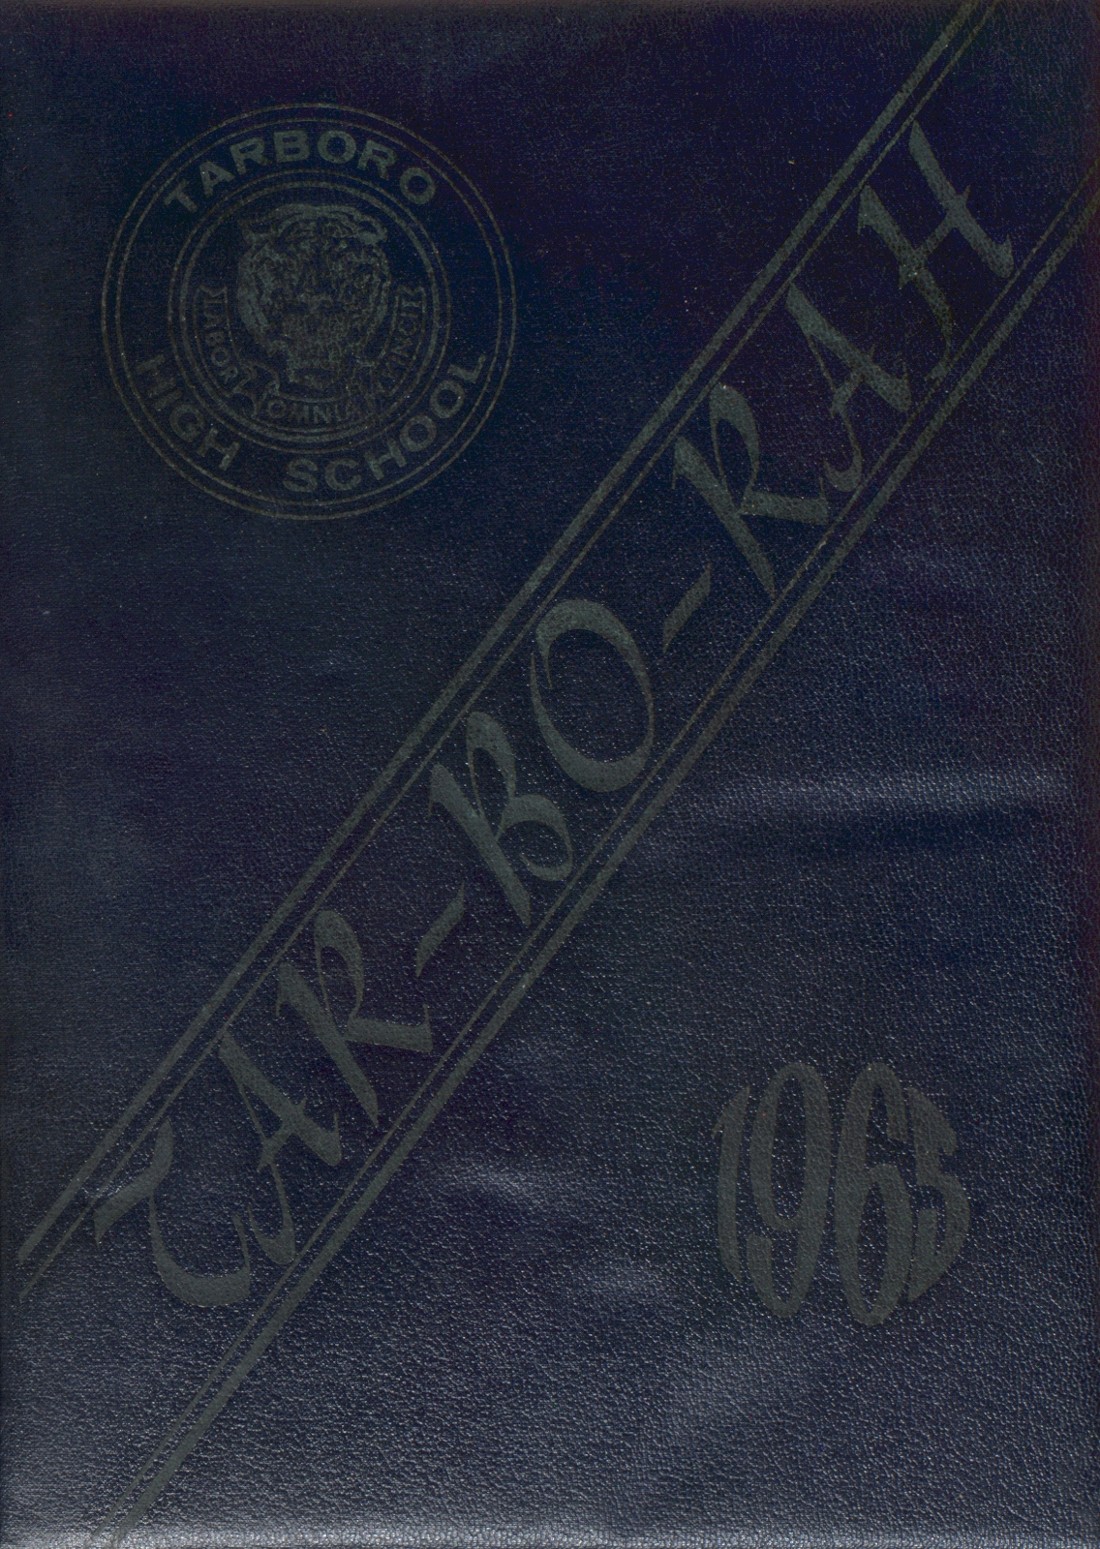 1965 yearbook from Tarboro High School from Tarboro, North Carolina for ...